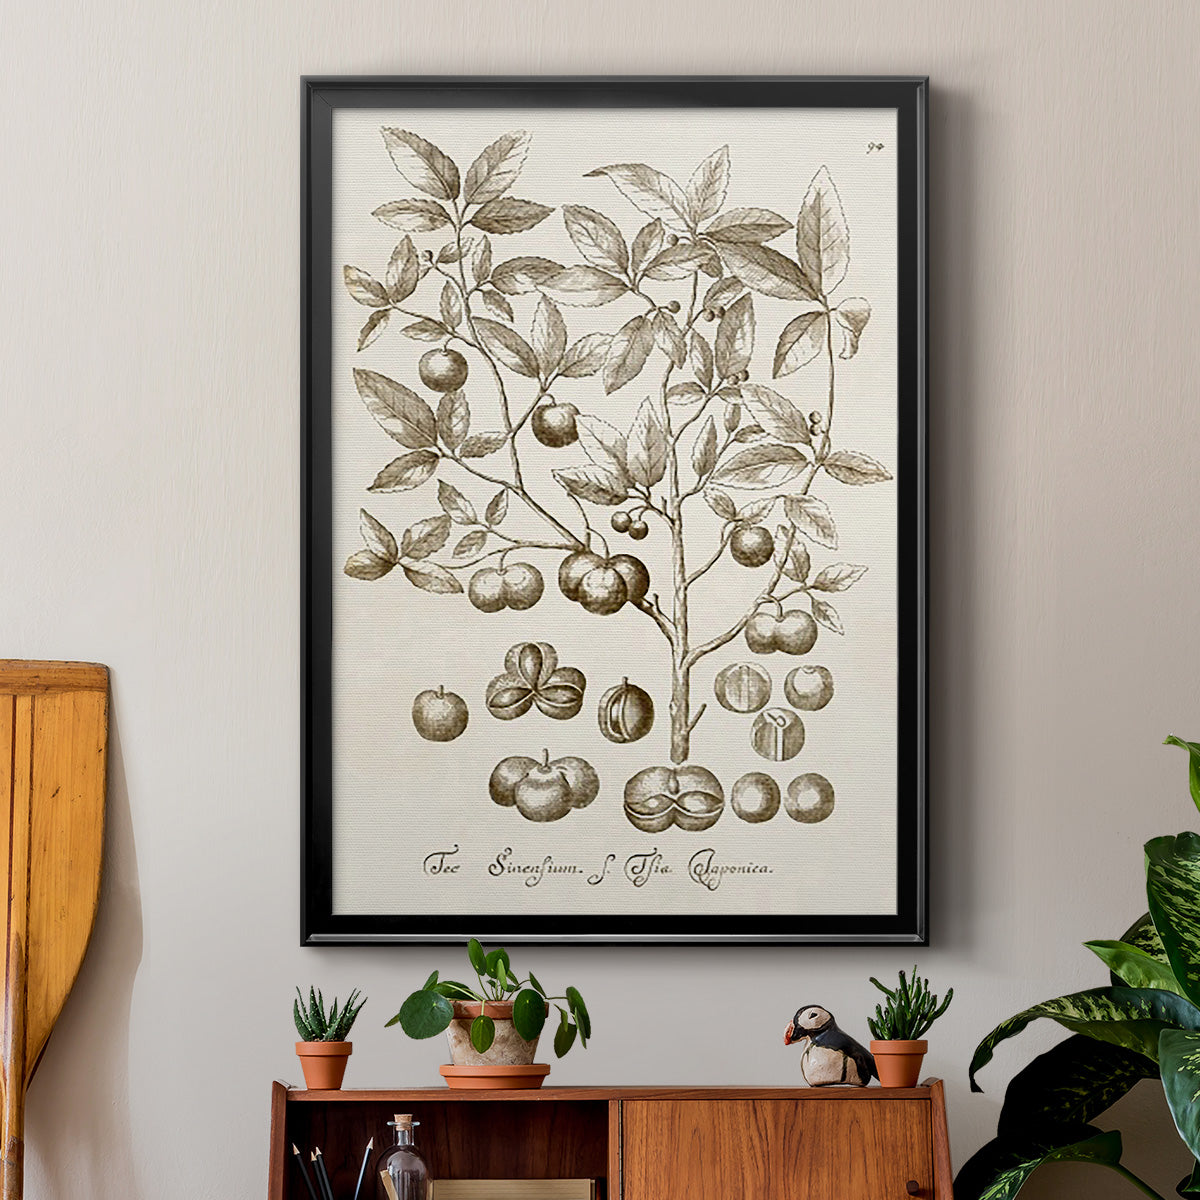 Sepia Botanical Journal II Premium Framed Print - Ready to Hang